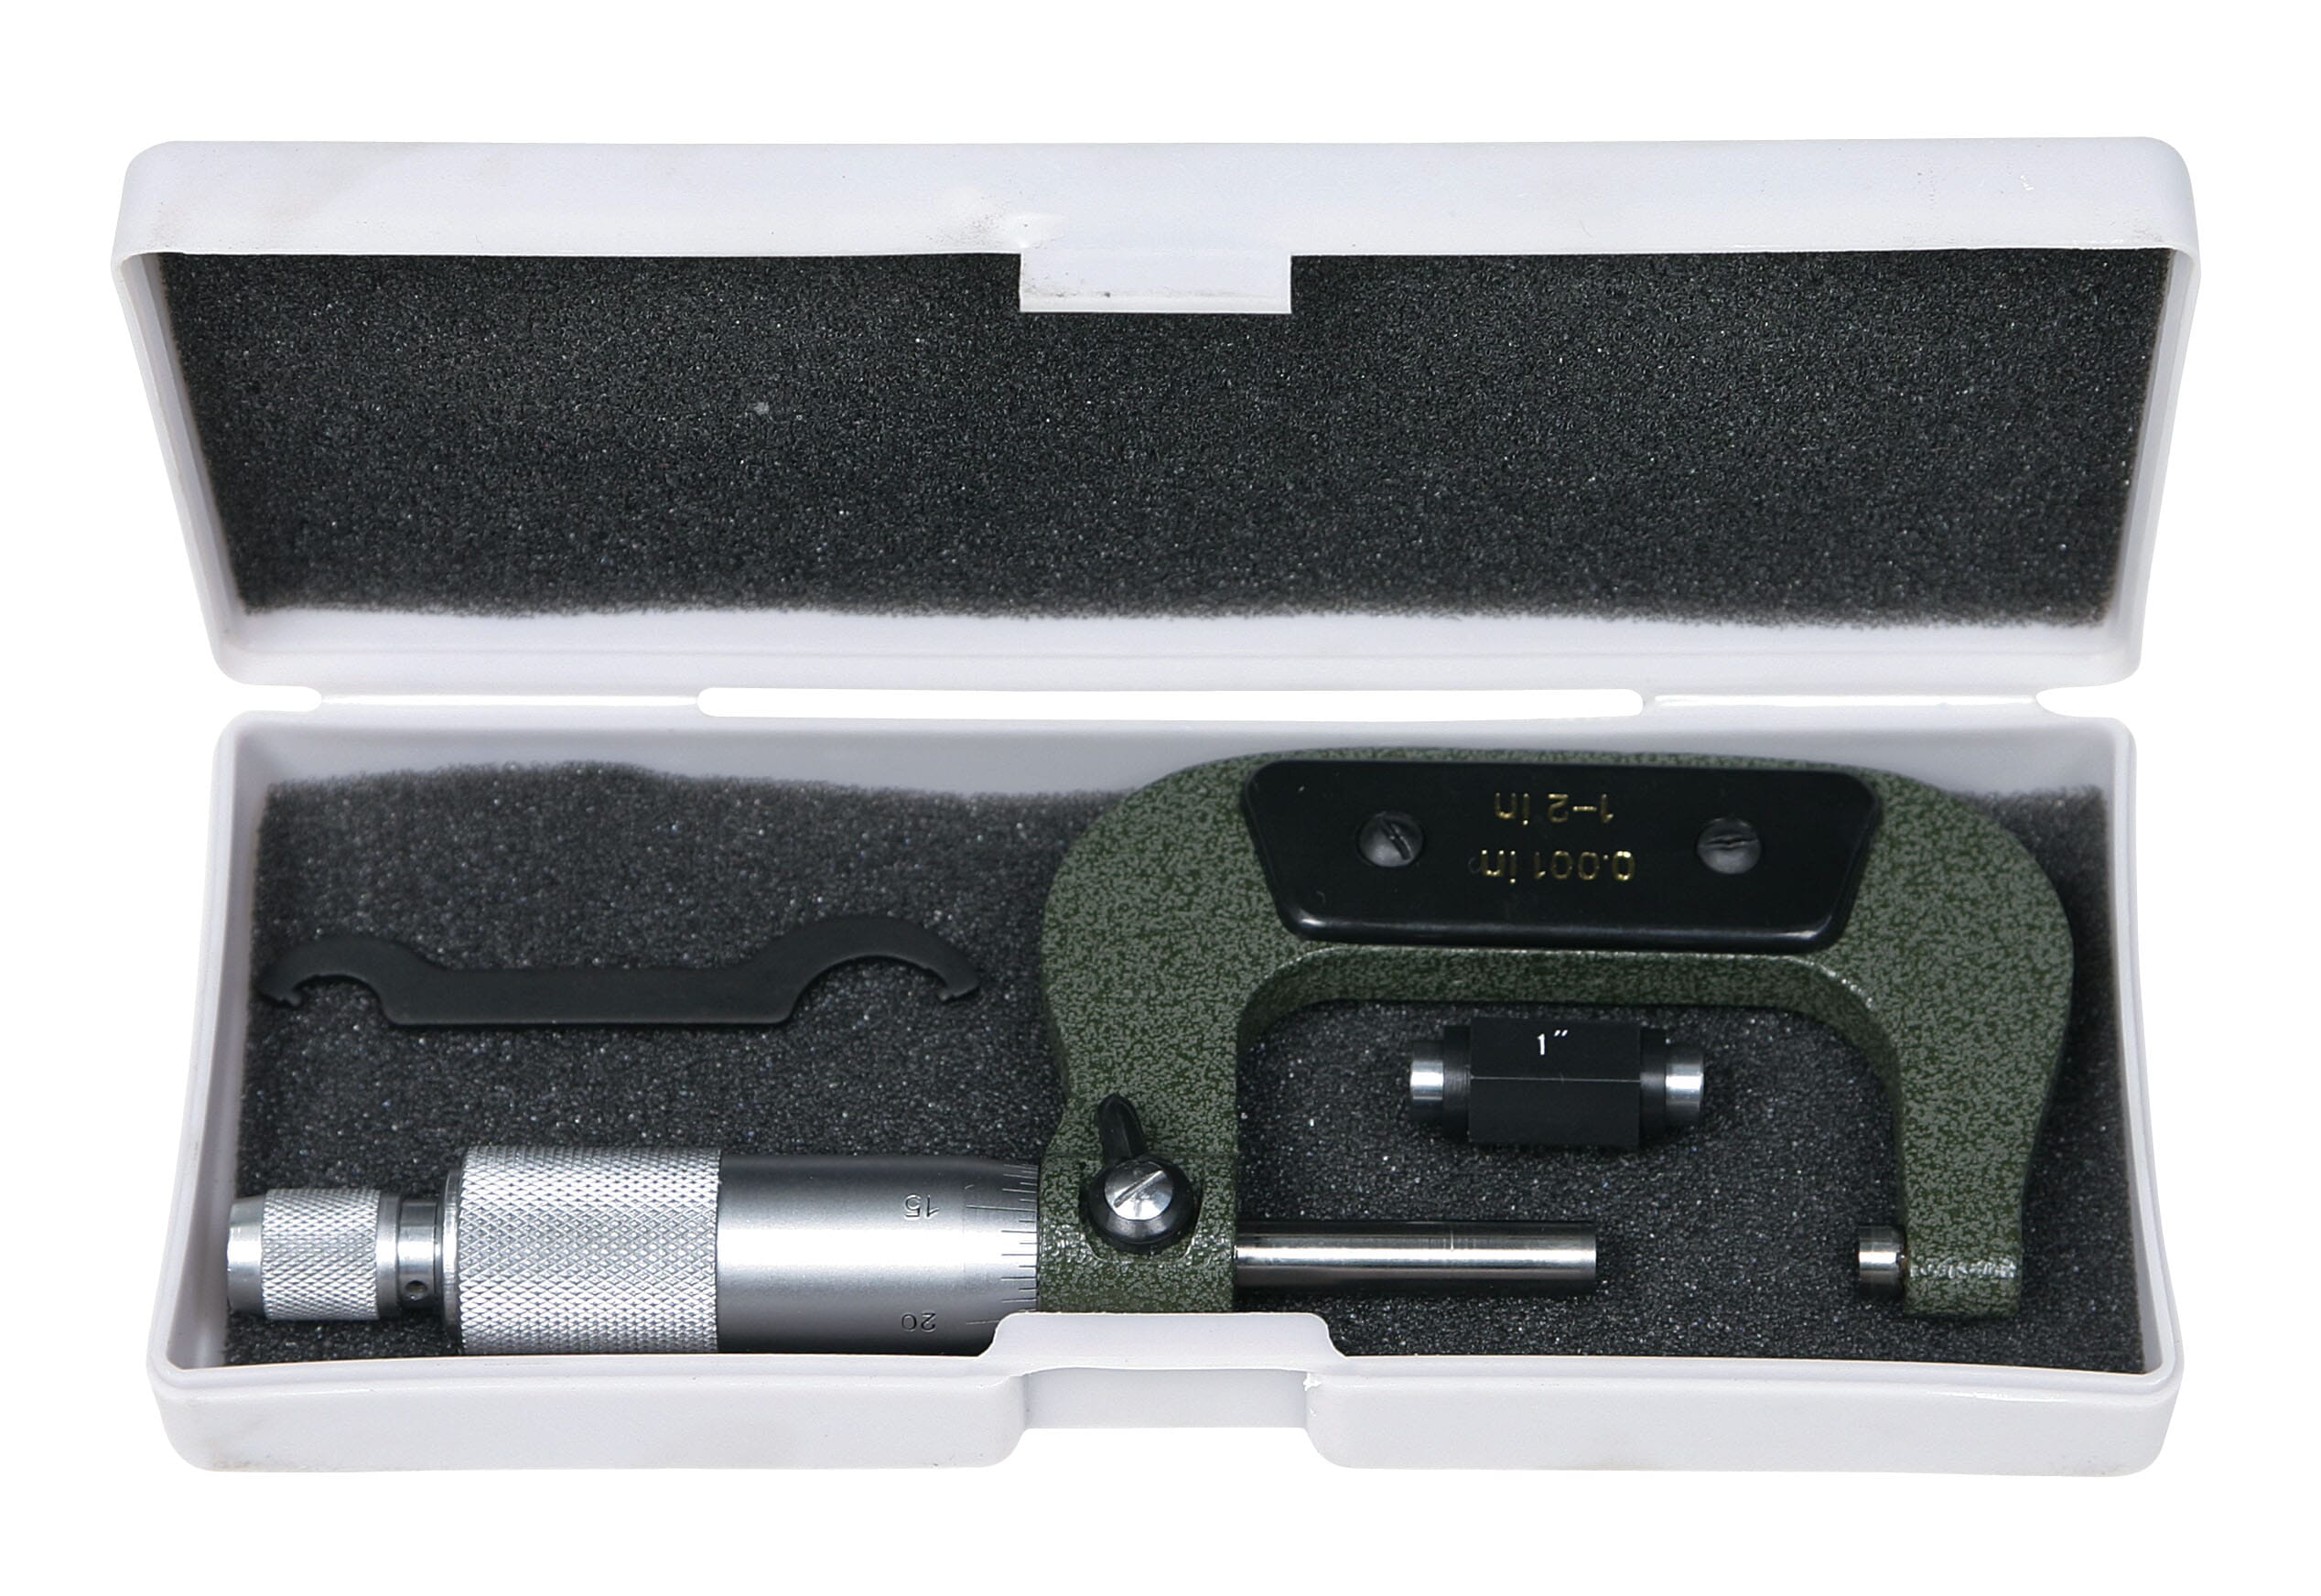 Wayco Micrometer Imperial 0-1"